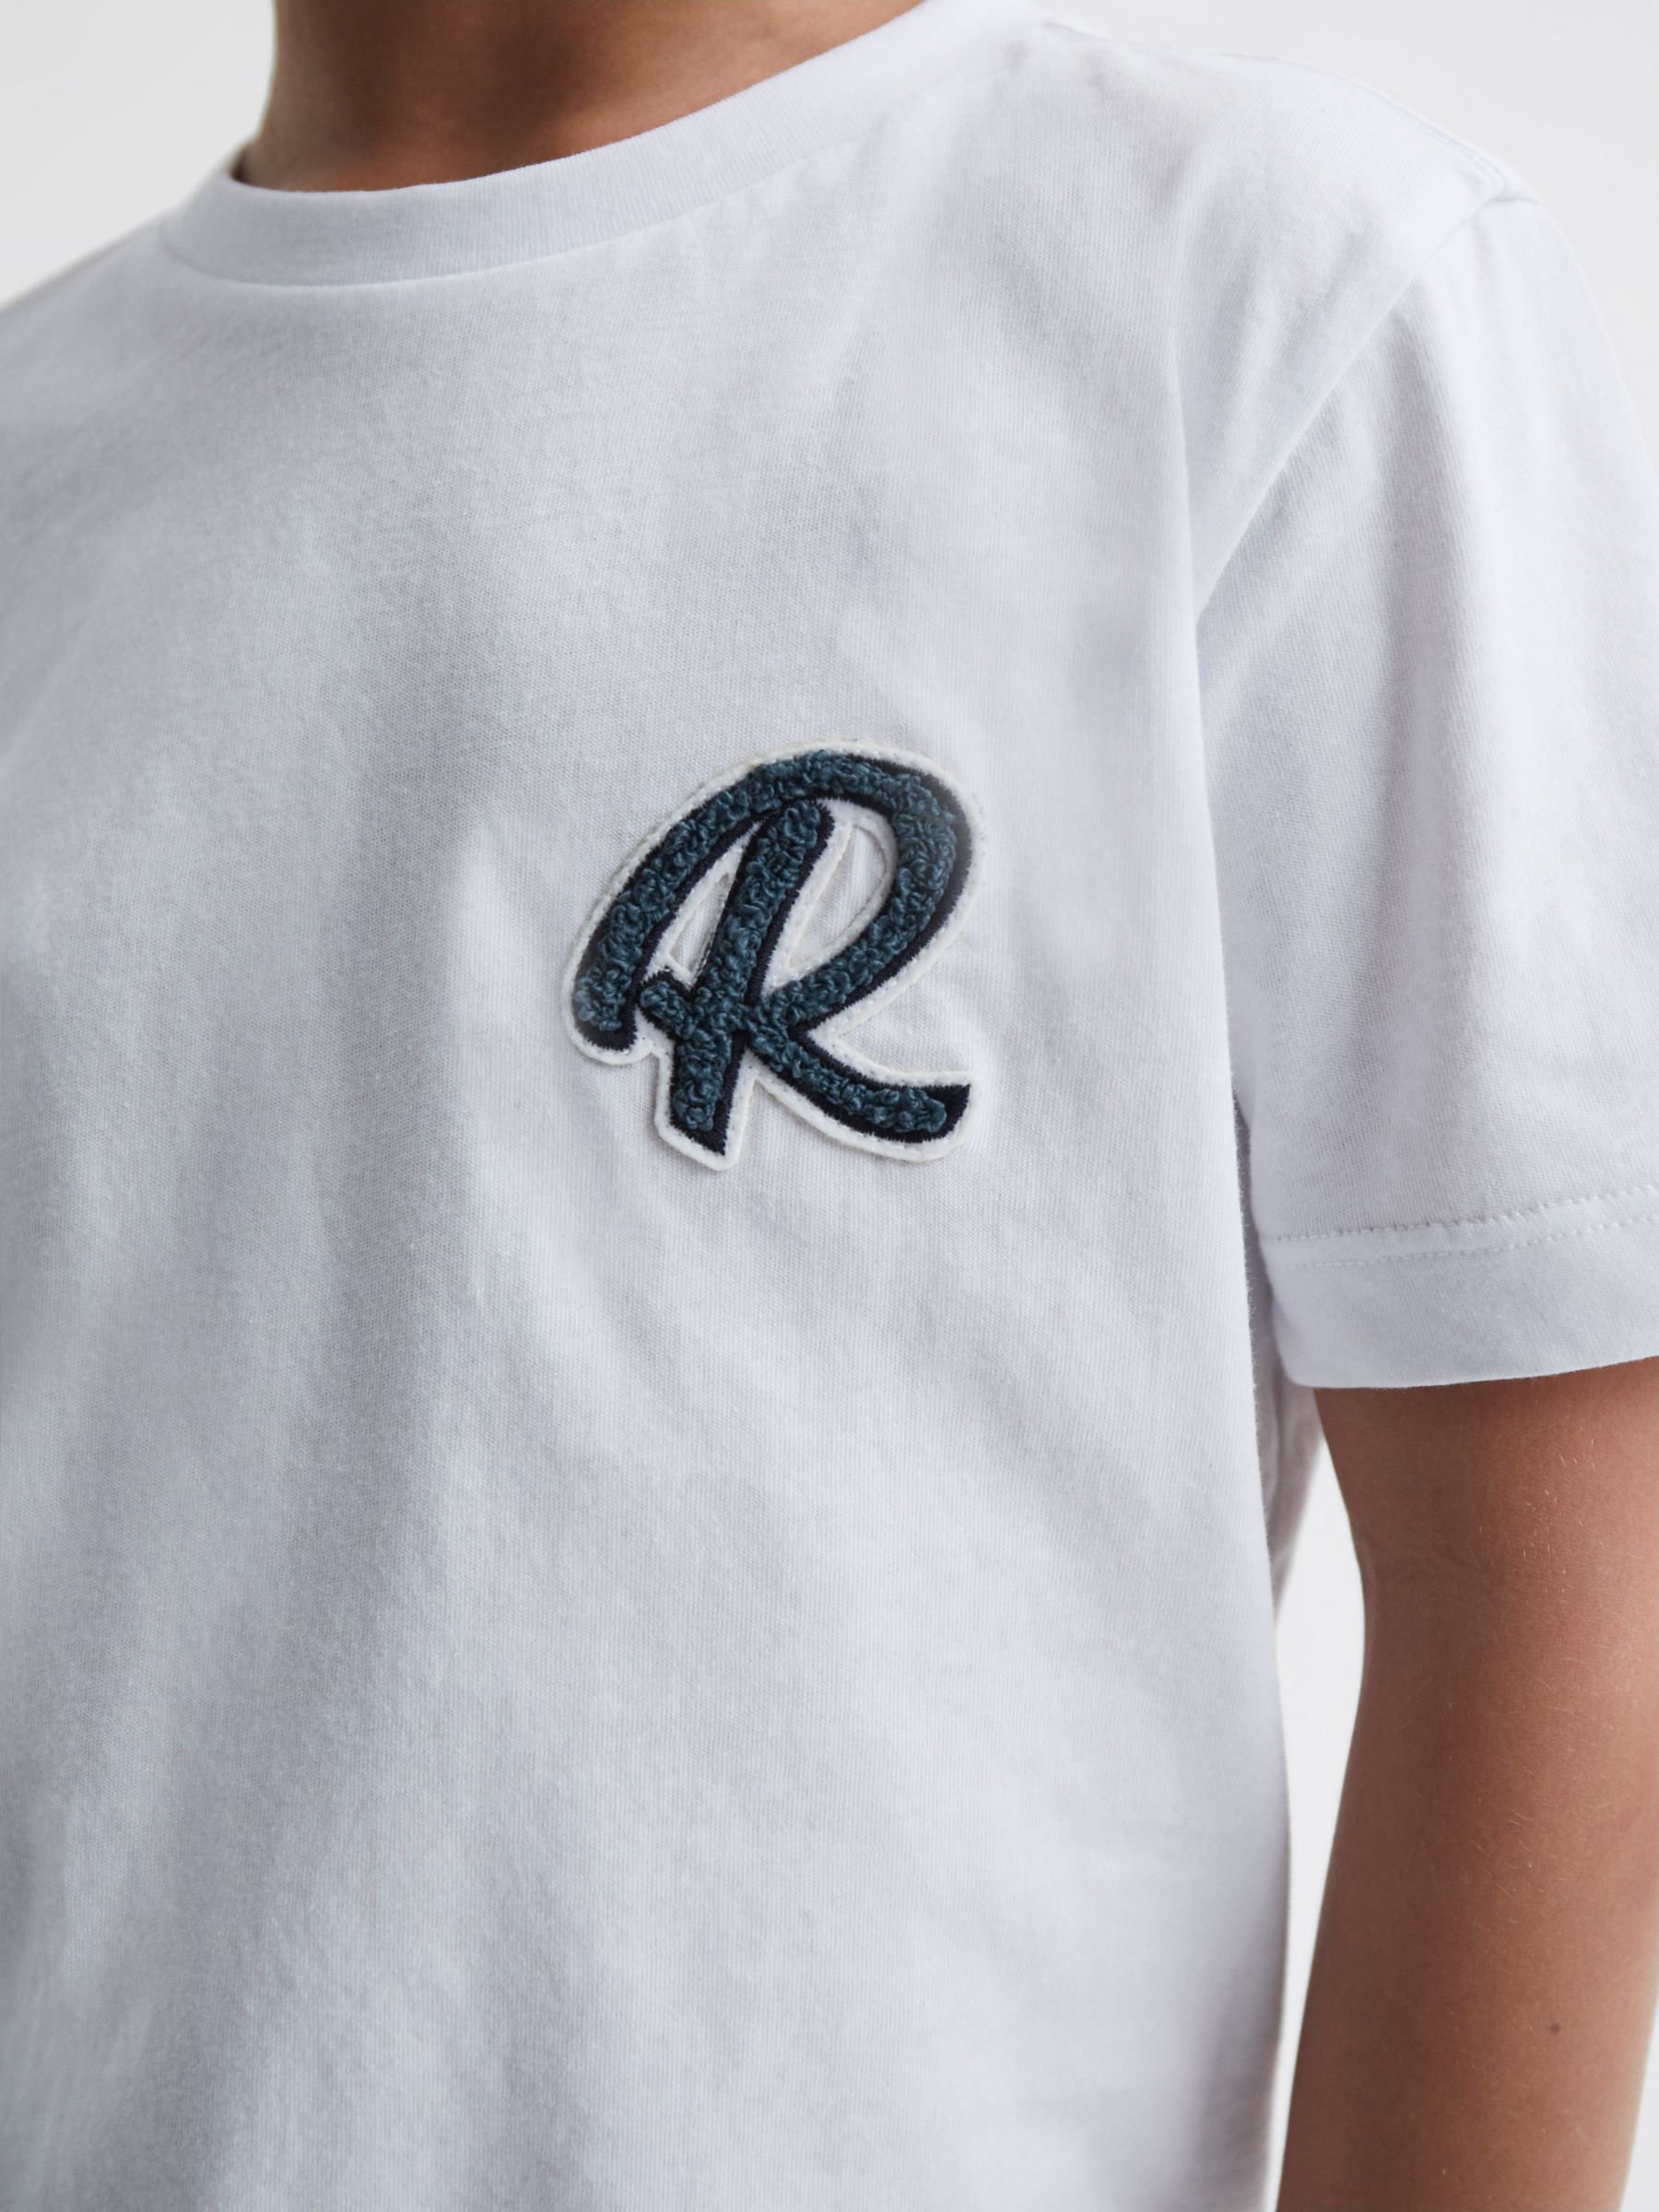 Buy Reiss Kids' Jude Cotton T-Shirt Online at johnlewis.com